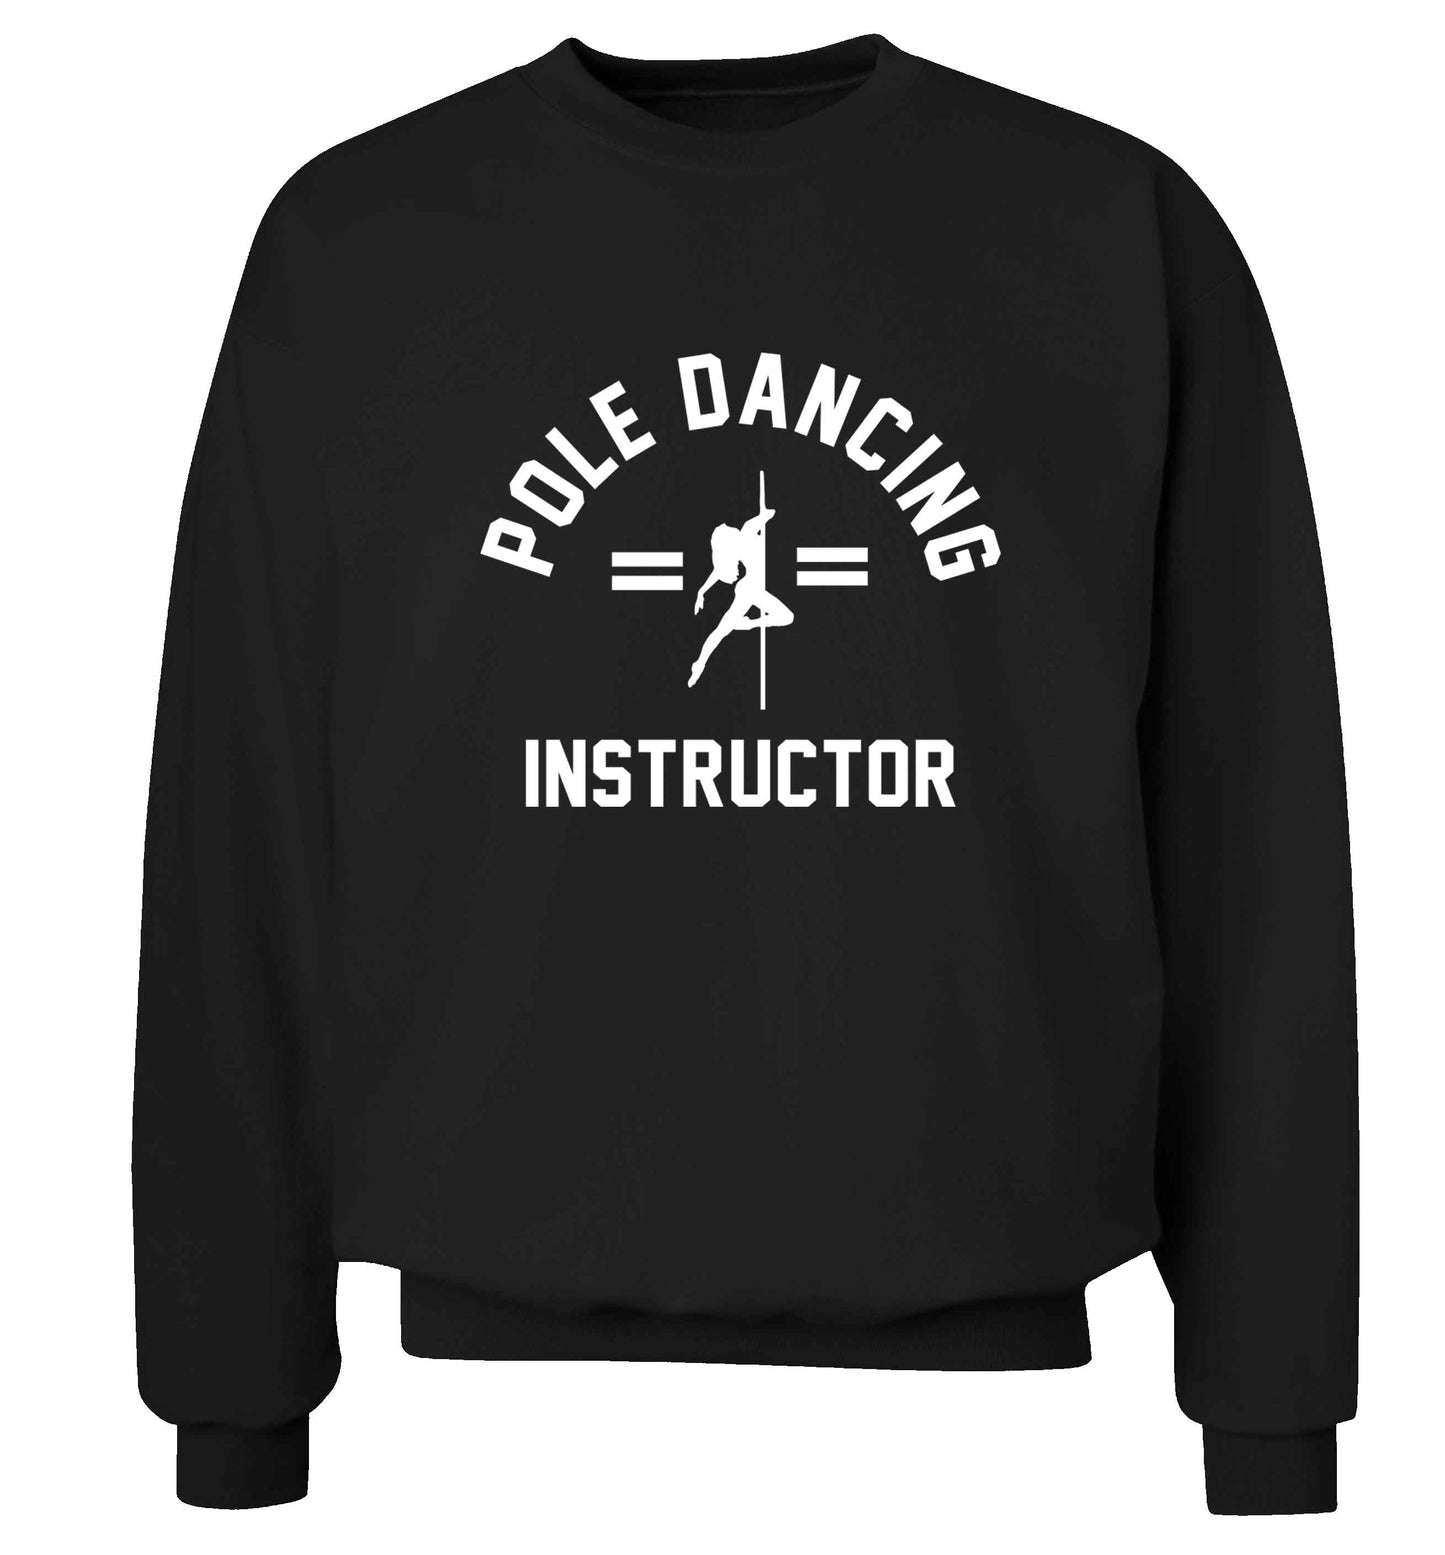 Pole dancing instructor adult's unisex black sweater 2XL